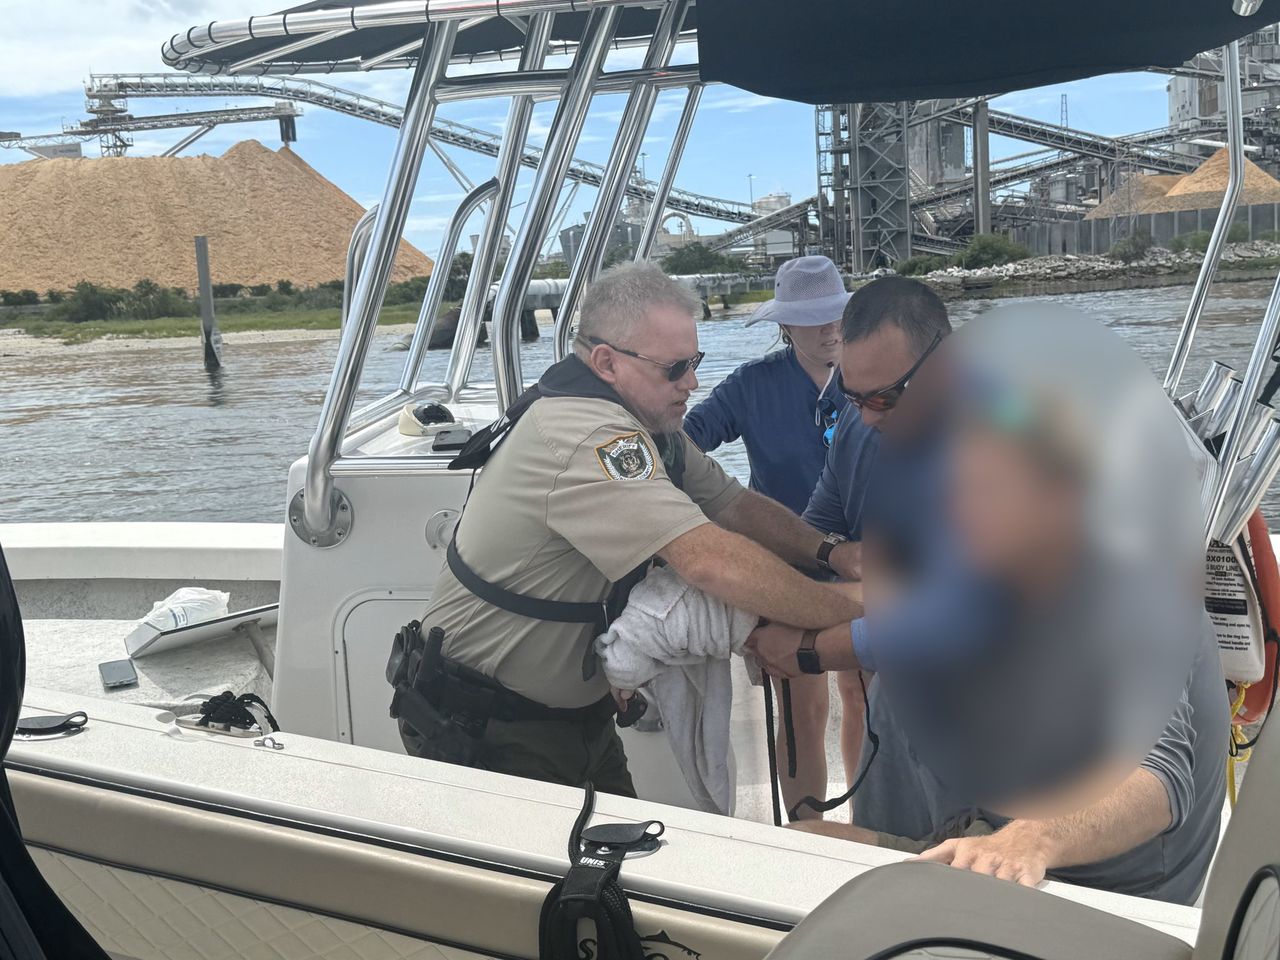 Fisherman critically injured in shark attack off Florida coast